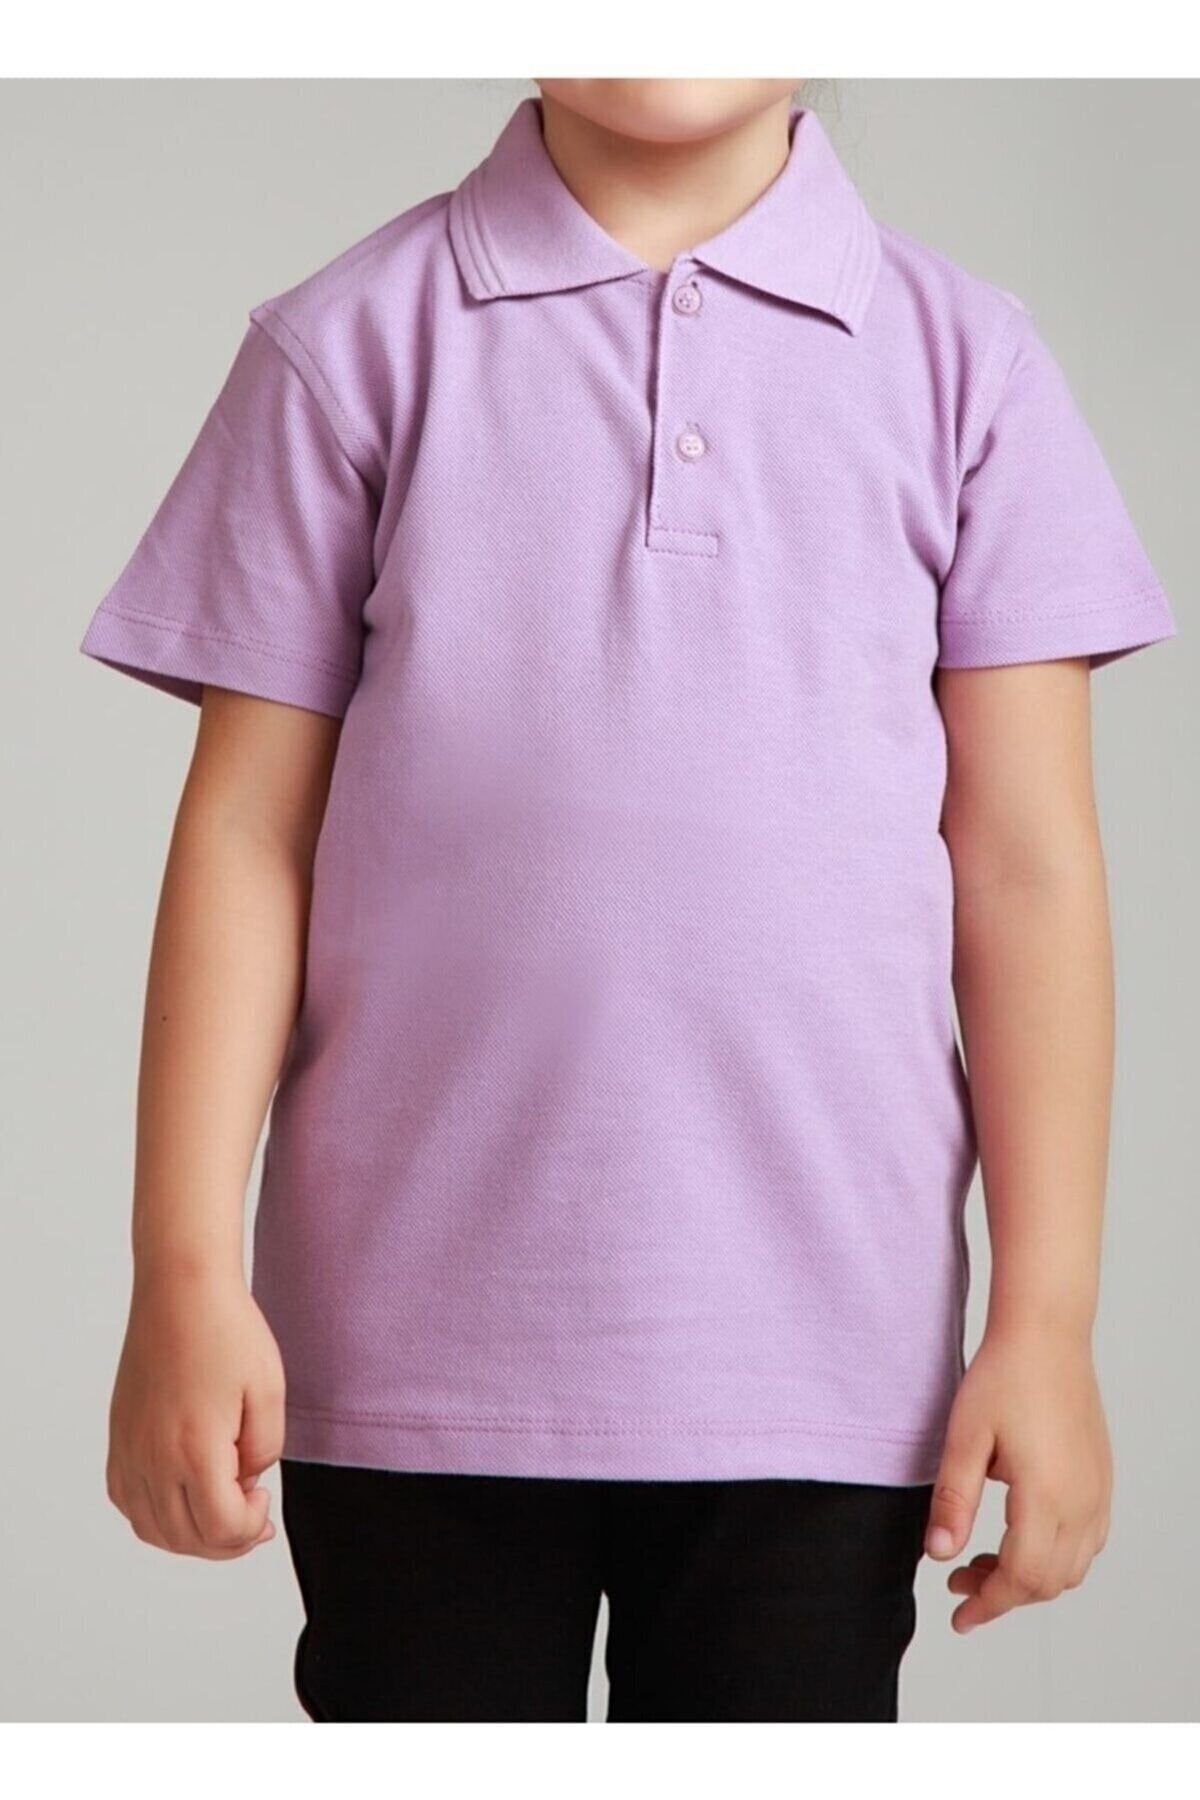 Nacar Çocuk Polo Yaka Kısa Kol Tshirt